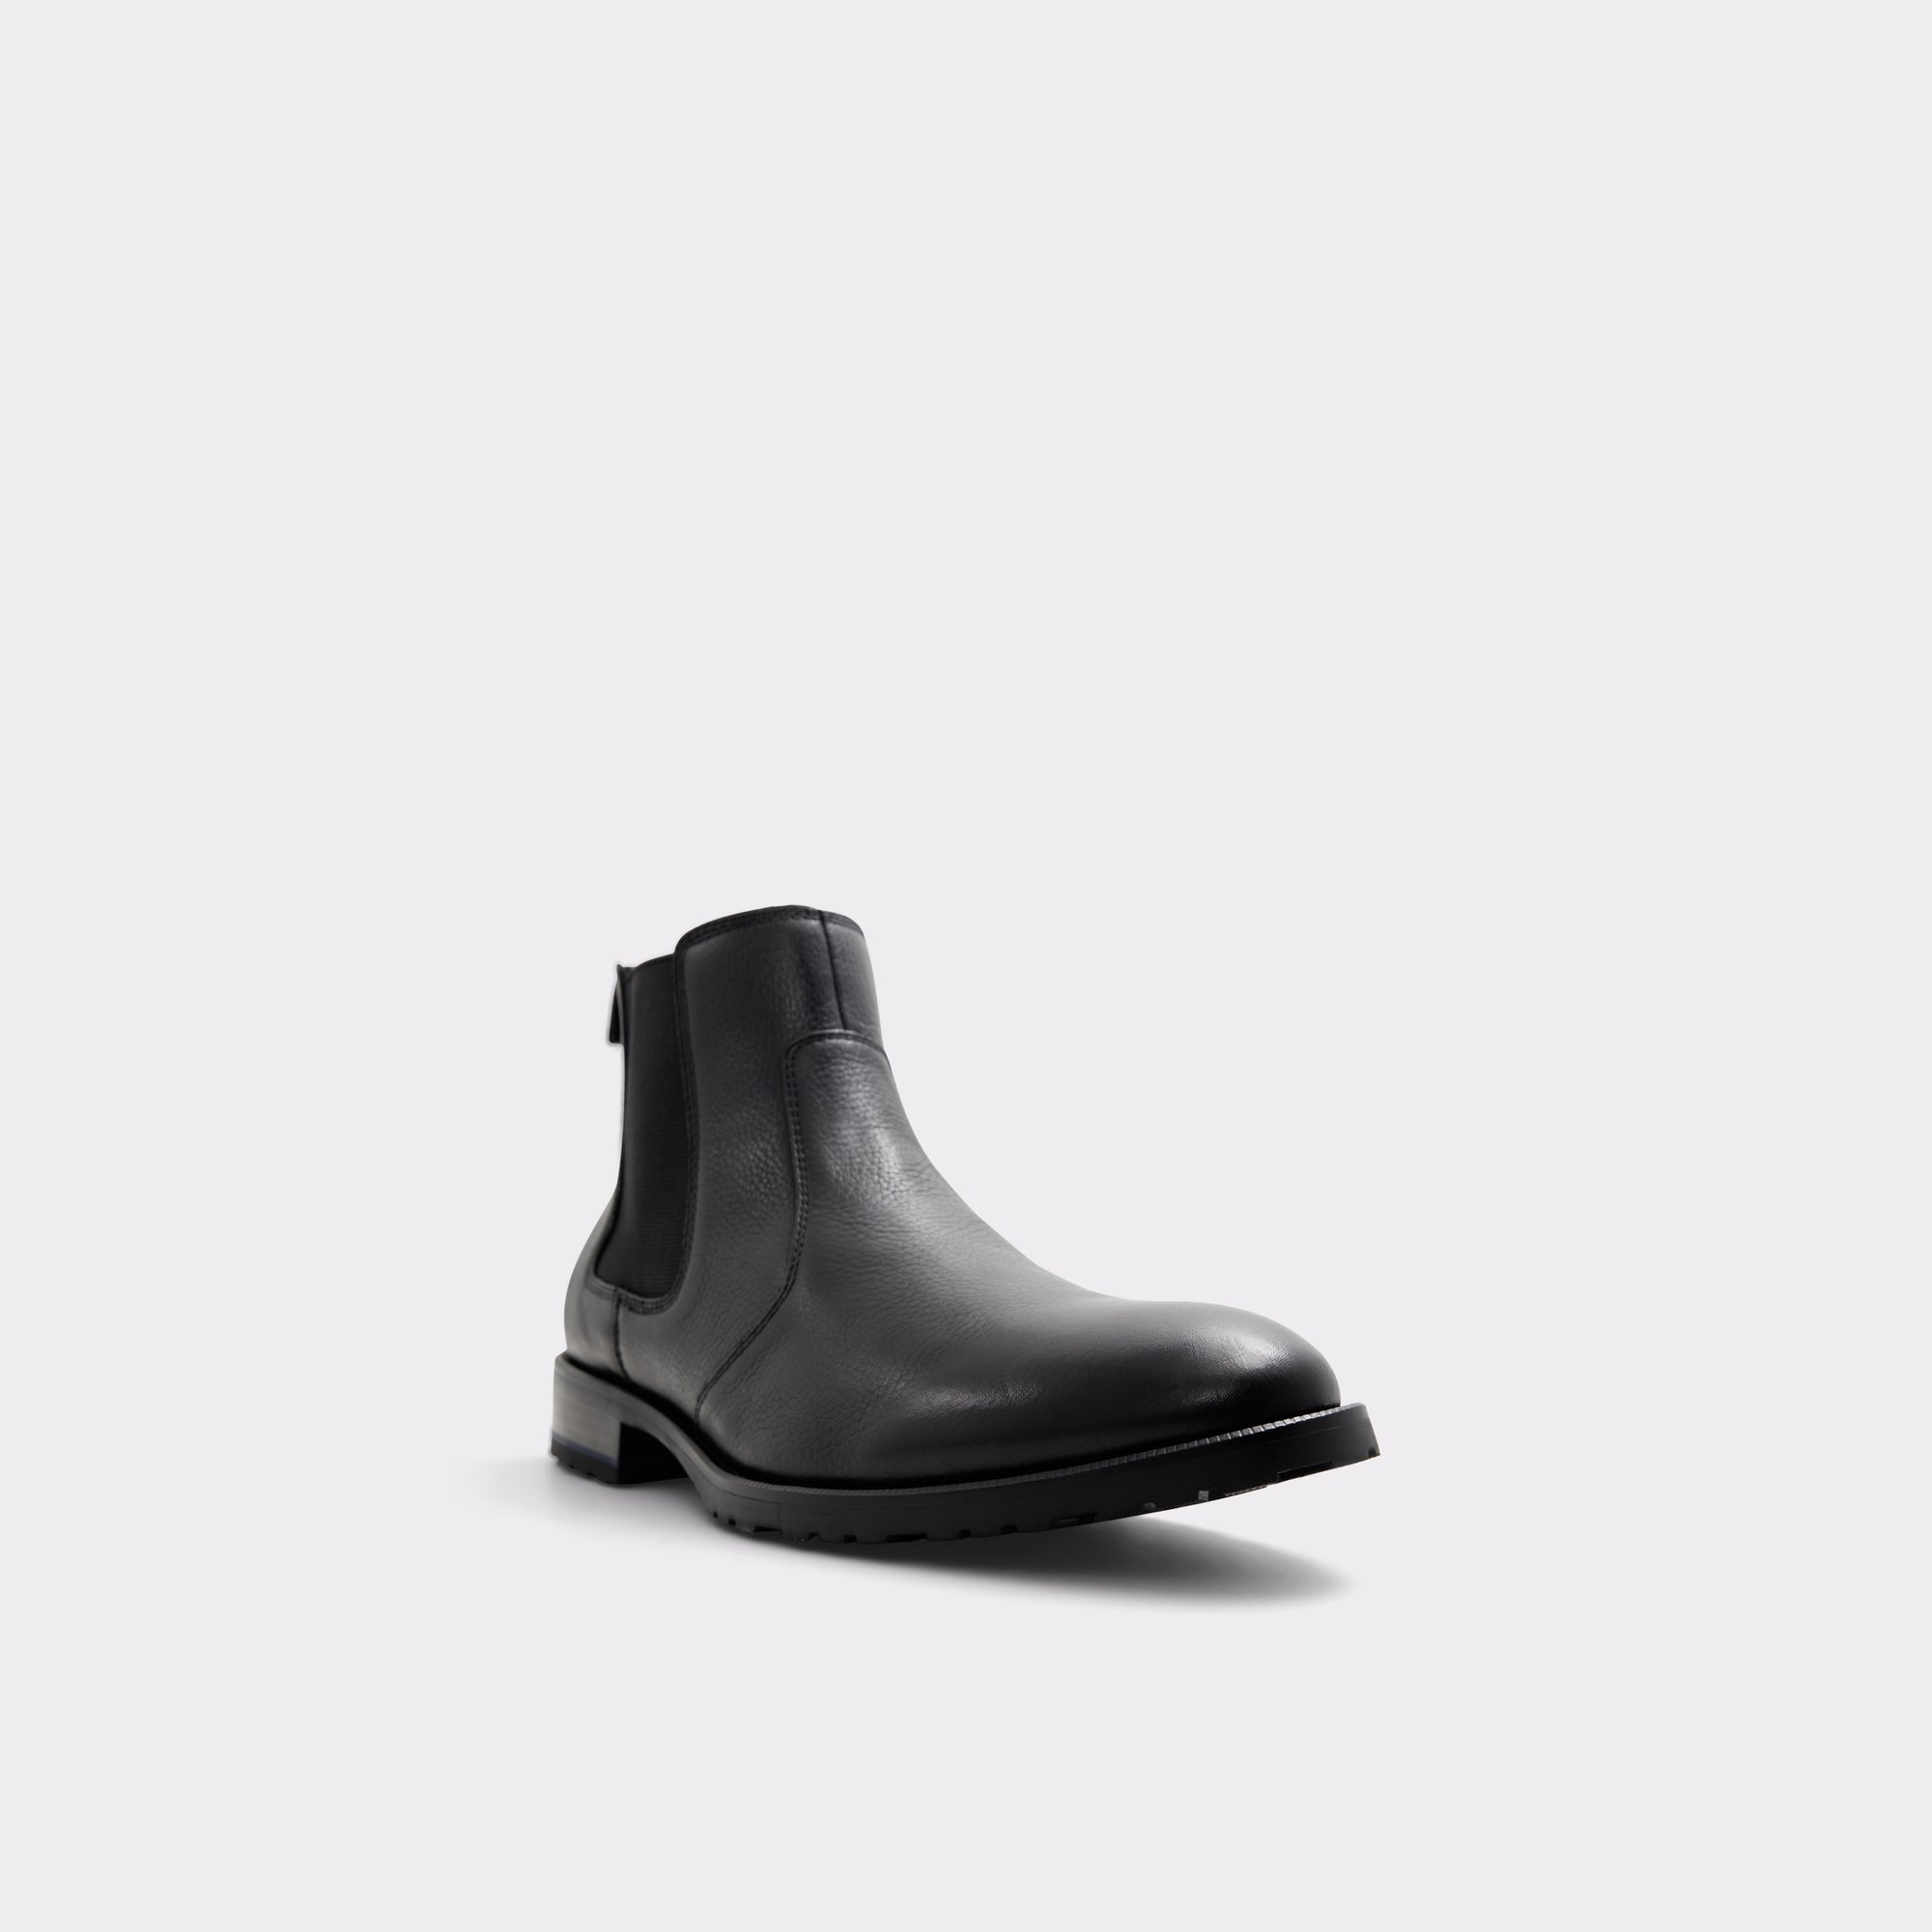 Proust Black Men's Dress boots | ALDO Canada